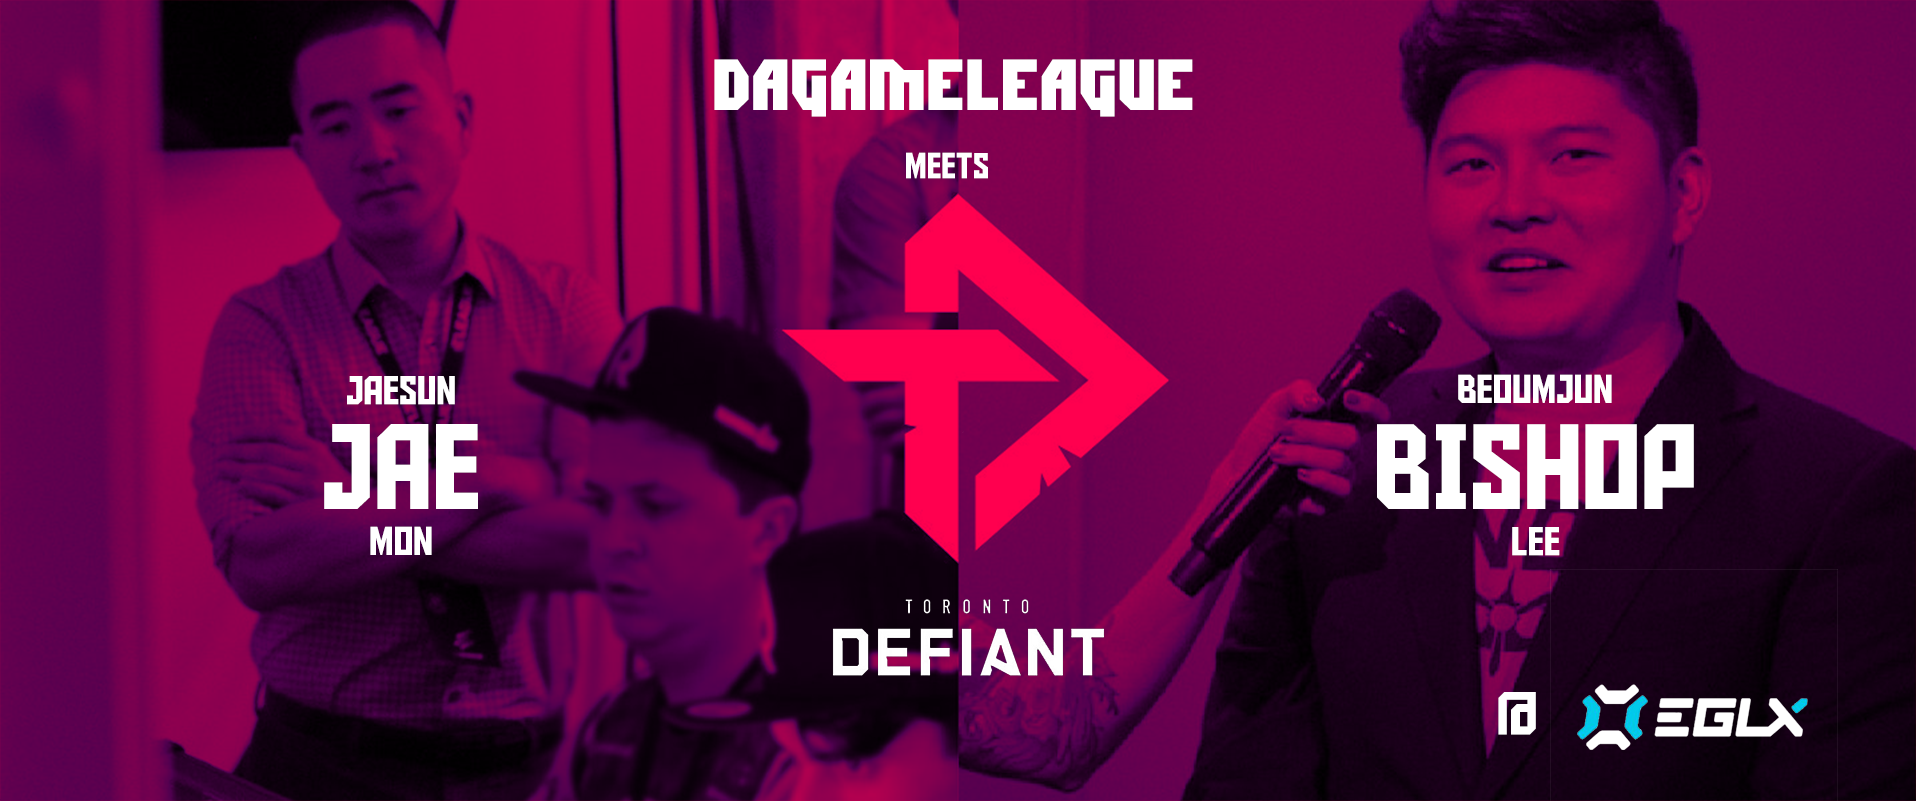 DaGameLeague esports news DGL meets Toronto DEFIANT banner